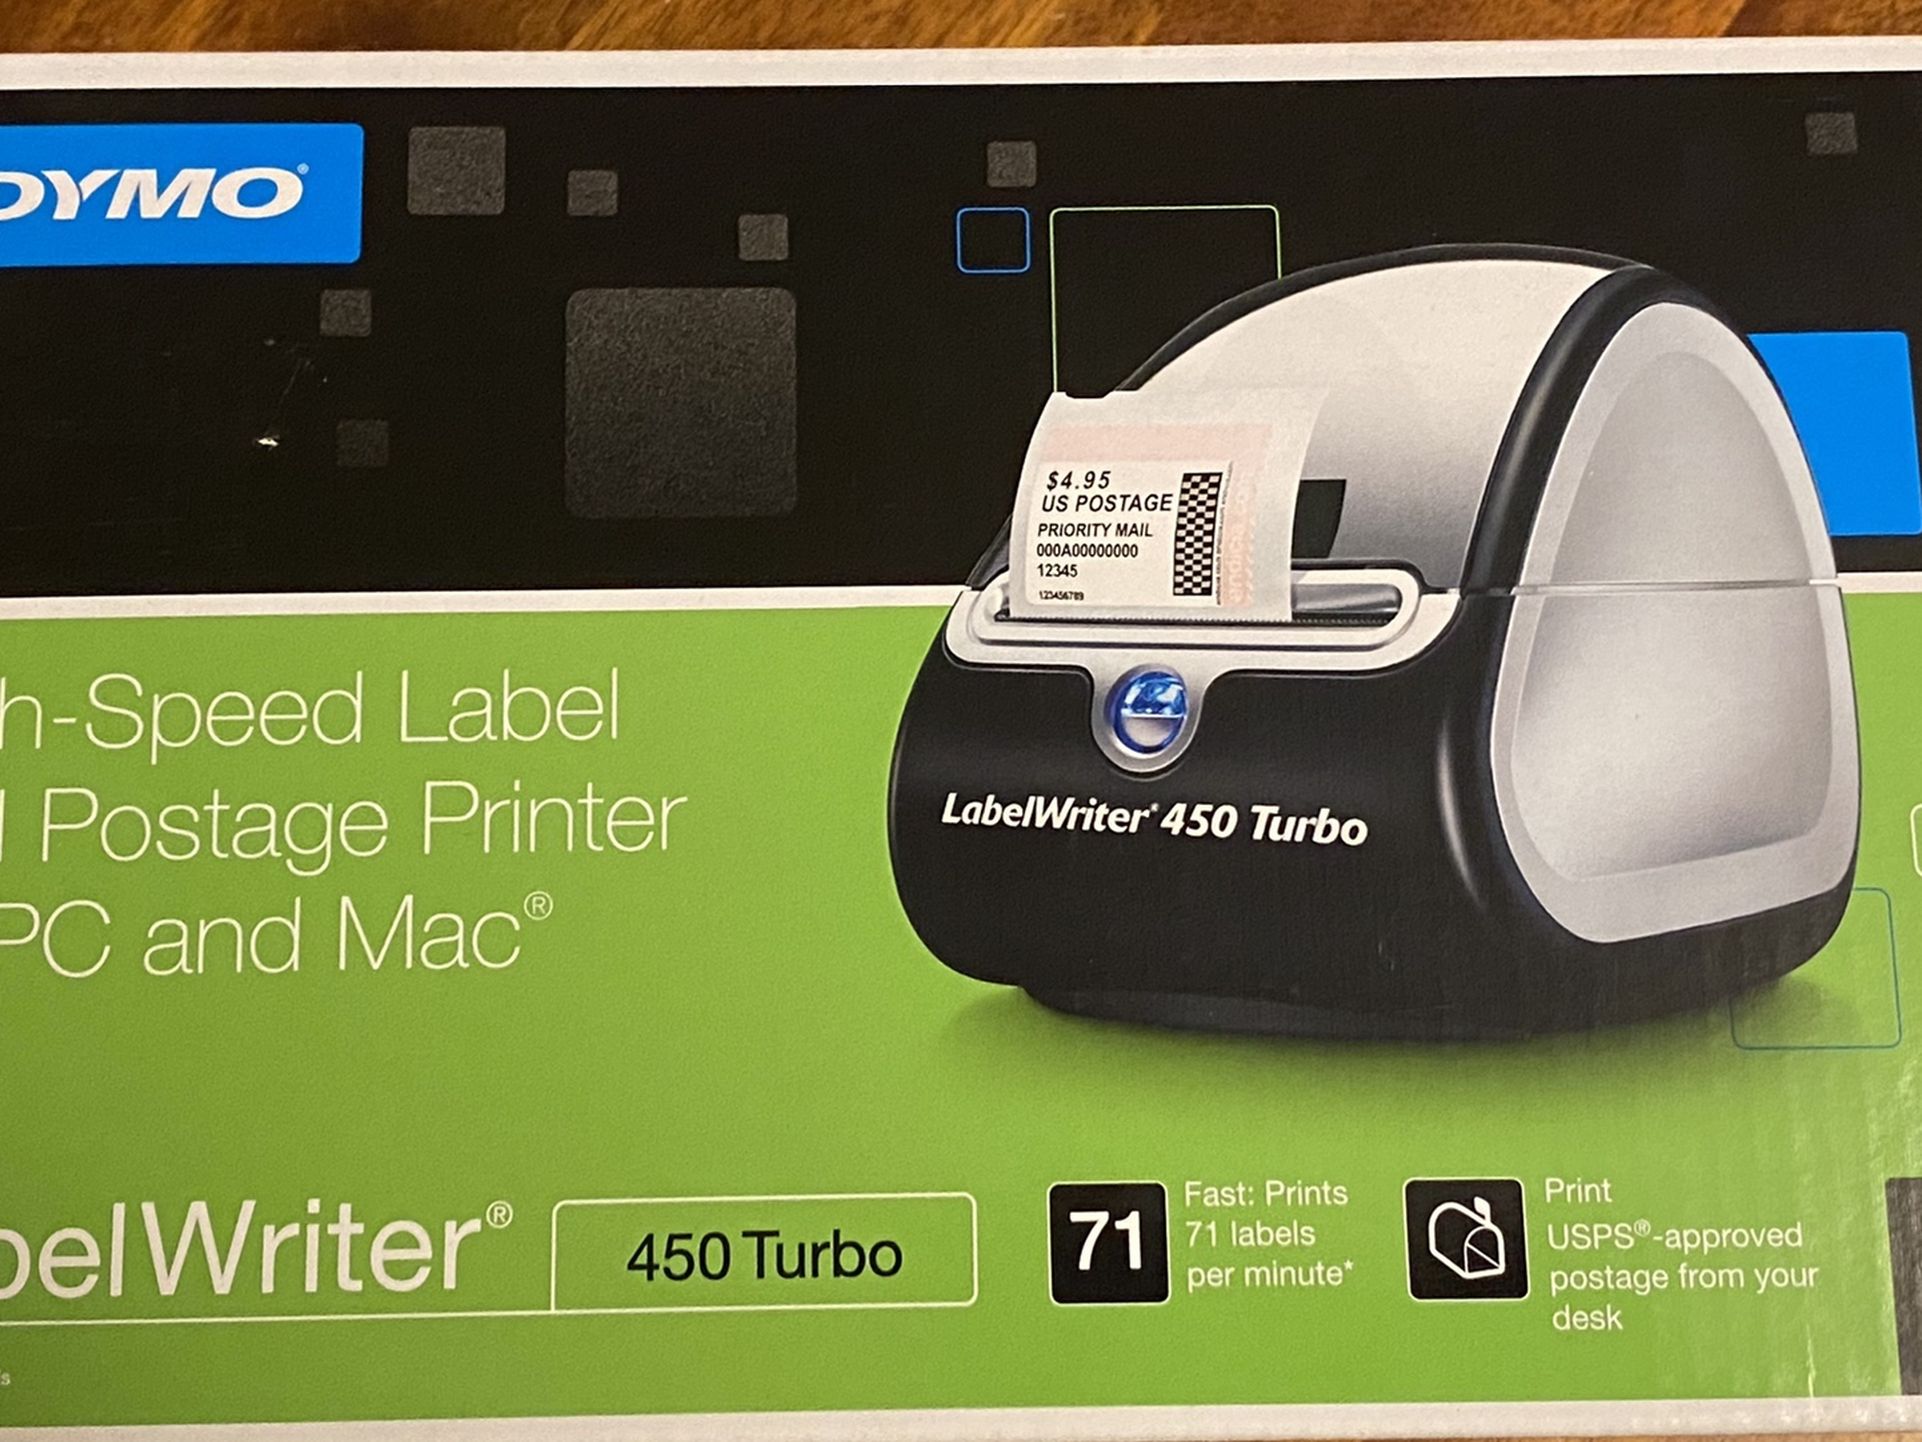 New Dymo Labewriter 450 Turbo label writer